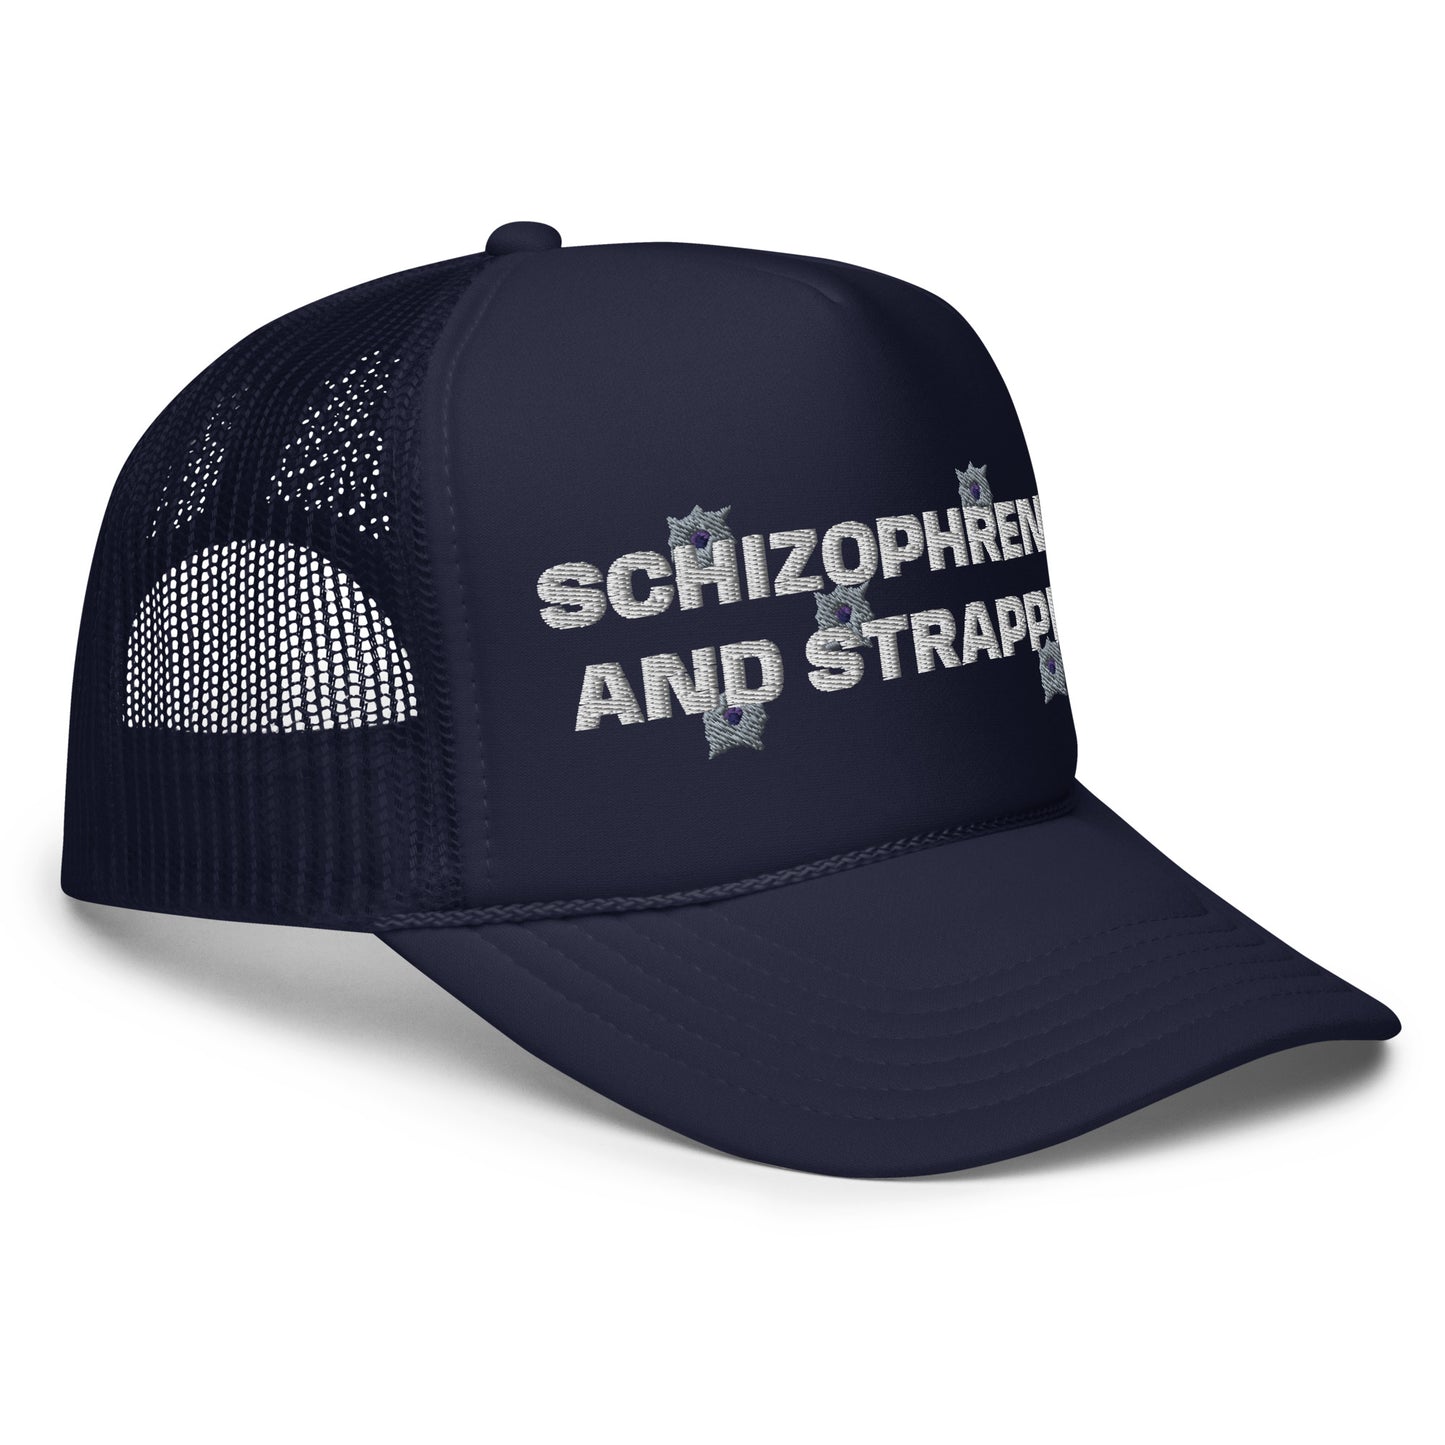 Schizophrenic And Strapped Foam Trucker Hat